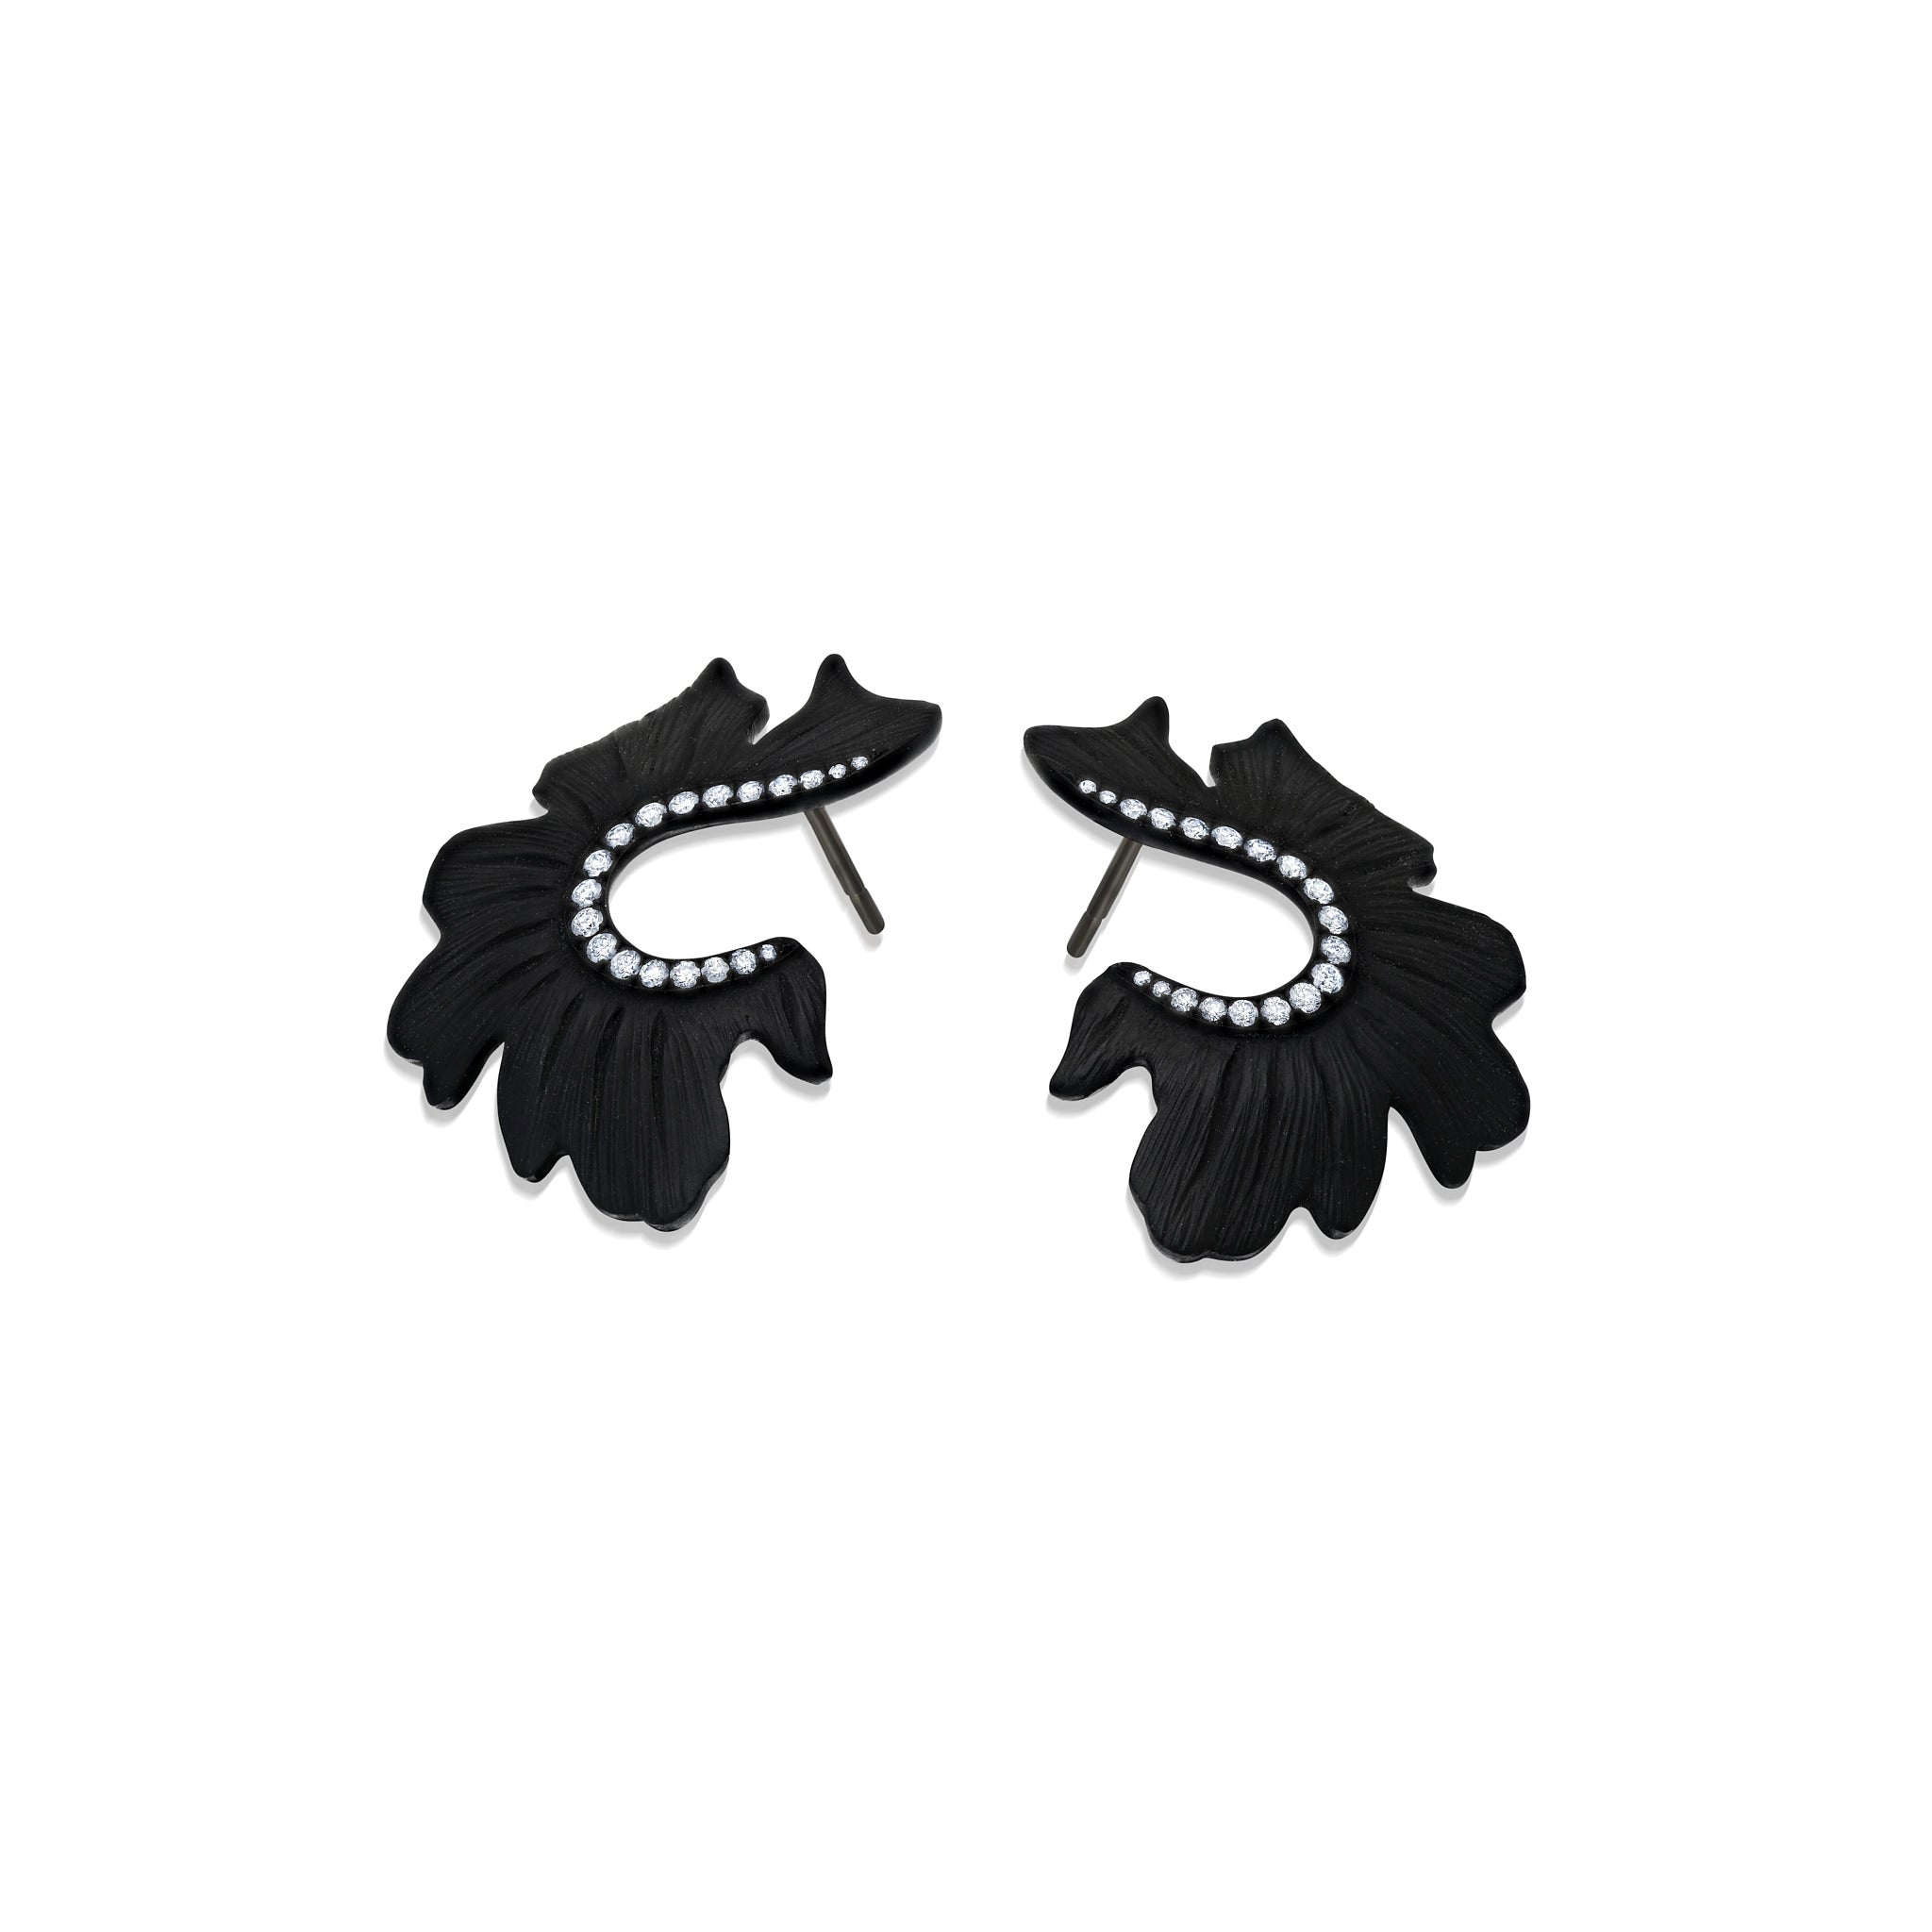 Matte Black Titanium Earrings